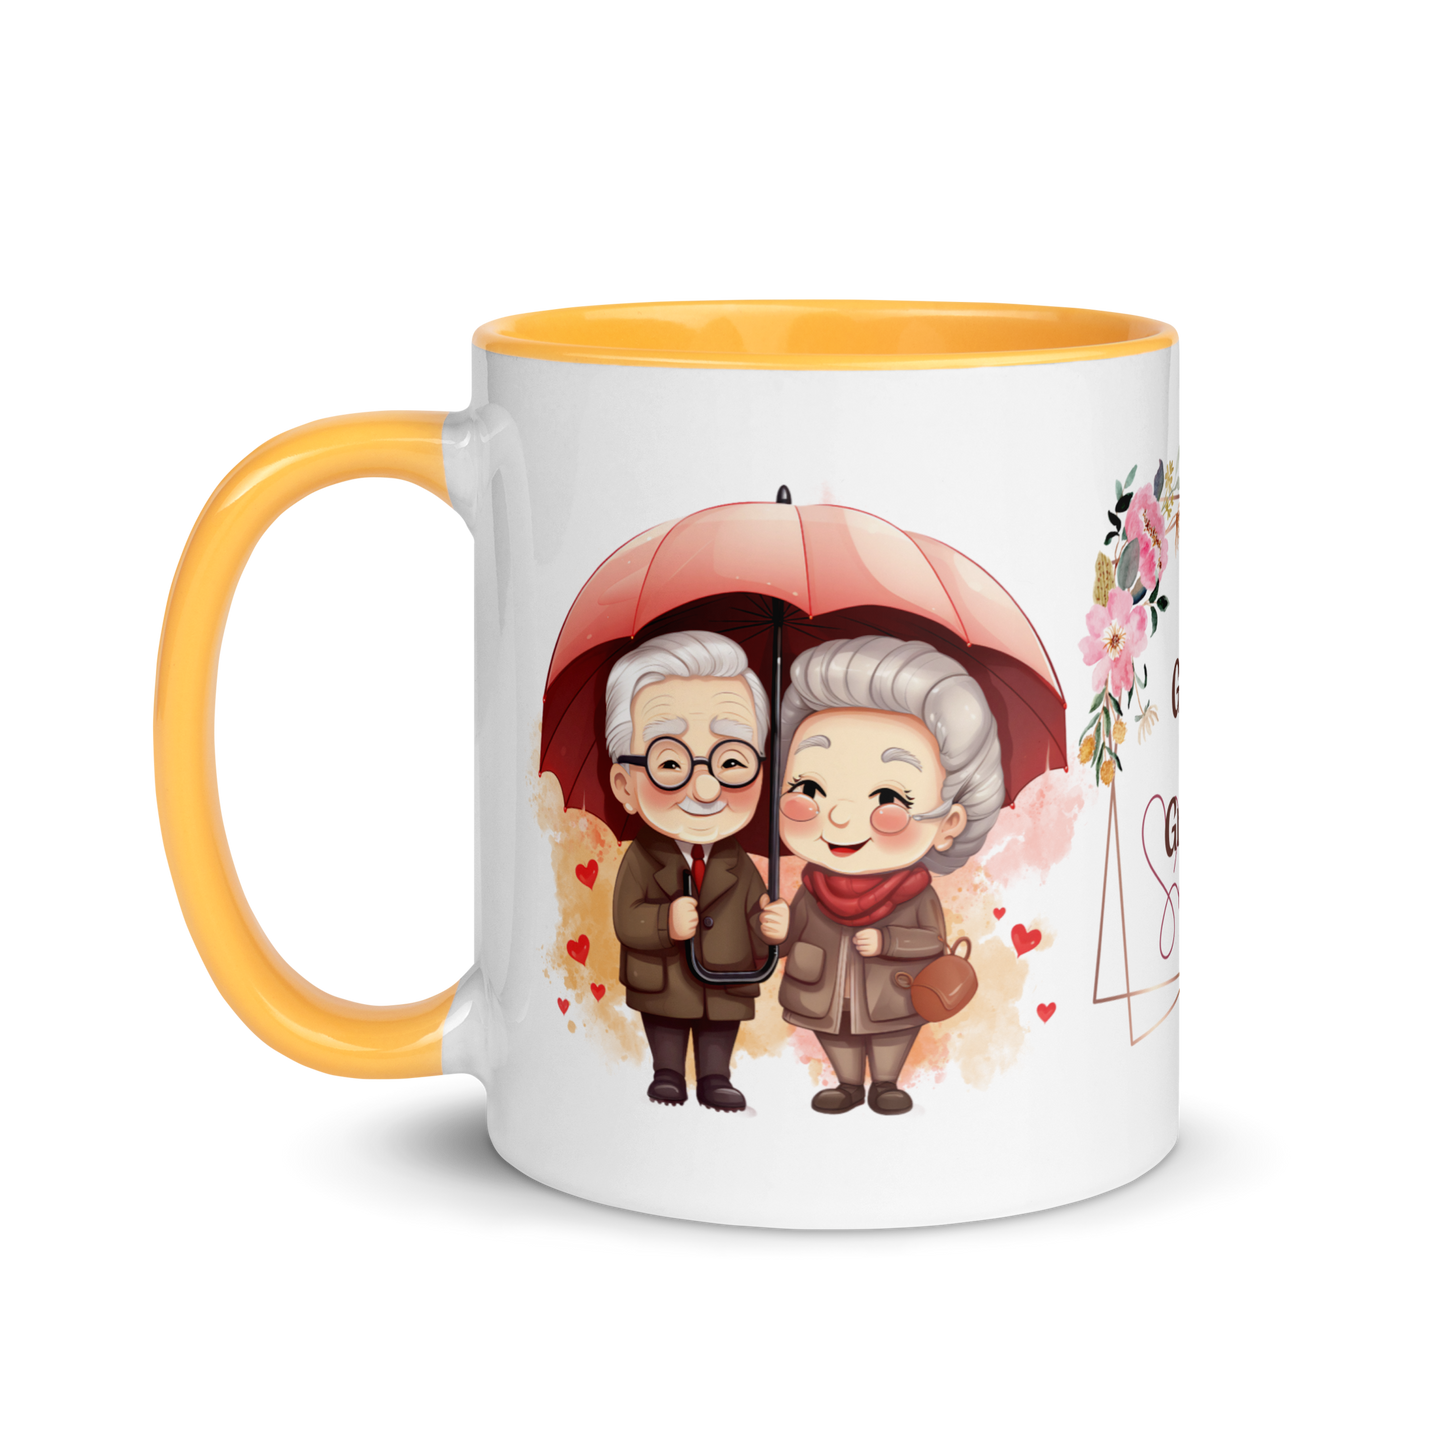 Accent Coffee Mug 11oz | Best Grandpa and Grandma Ever Holding an Umbrella